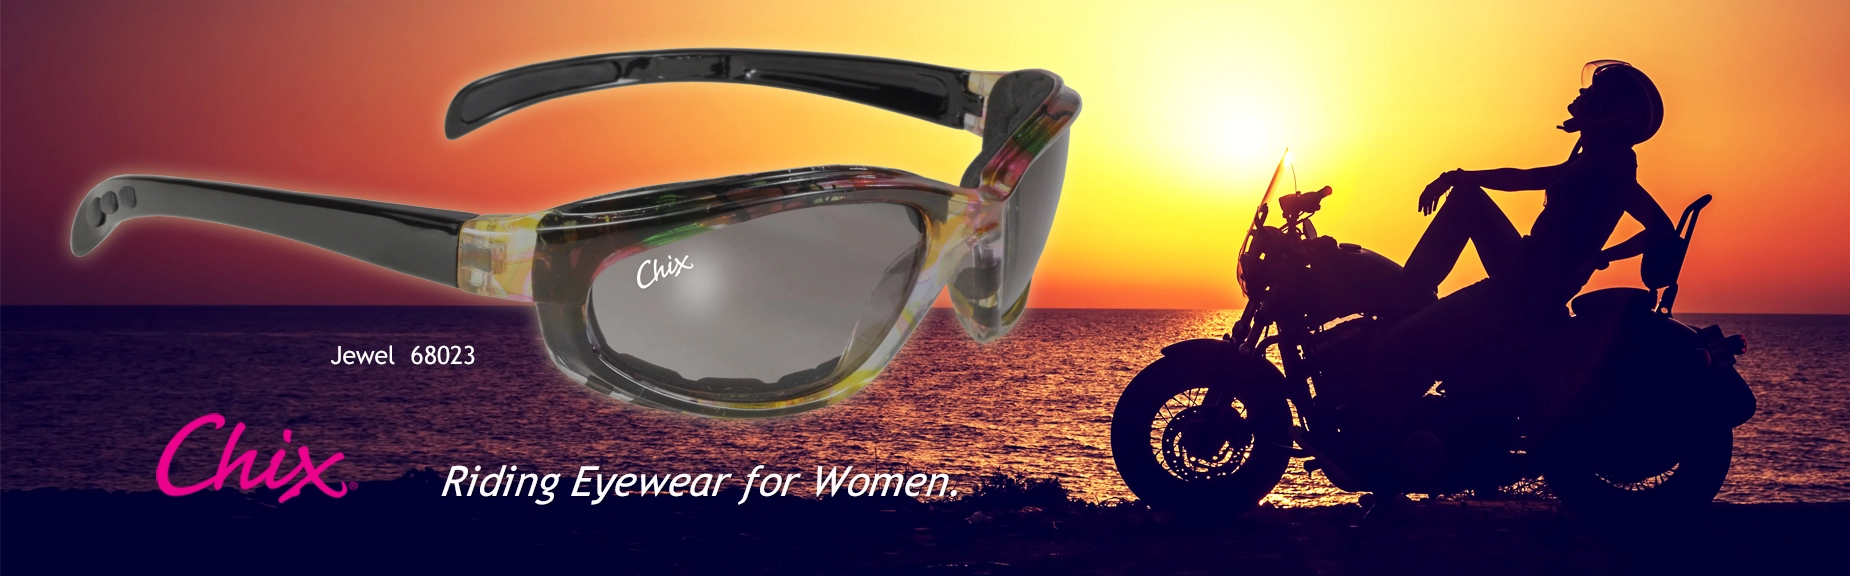 CHIX WOMEN'S MOTORCYCLE SUNGLASSES - Pacific Coast Sunglasses, Inc.